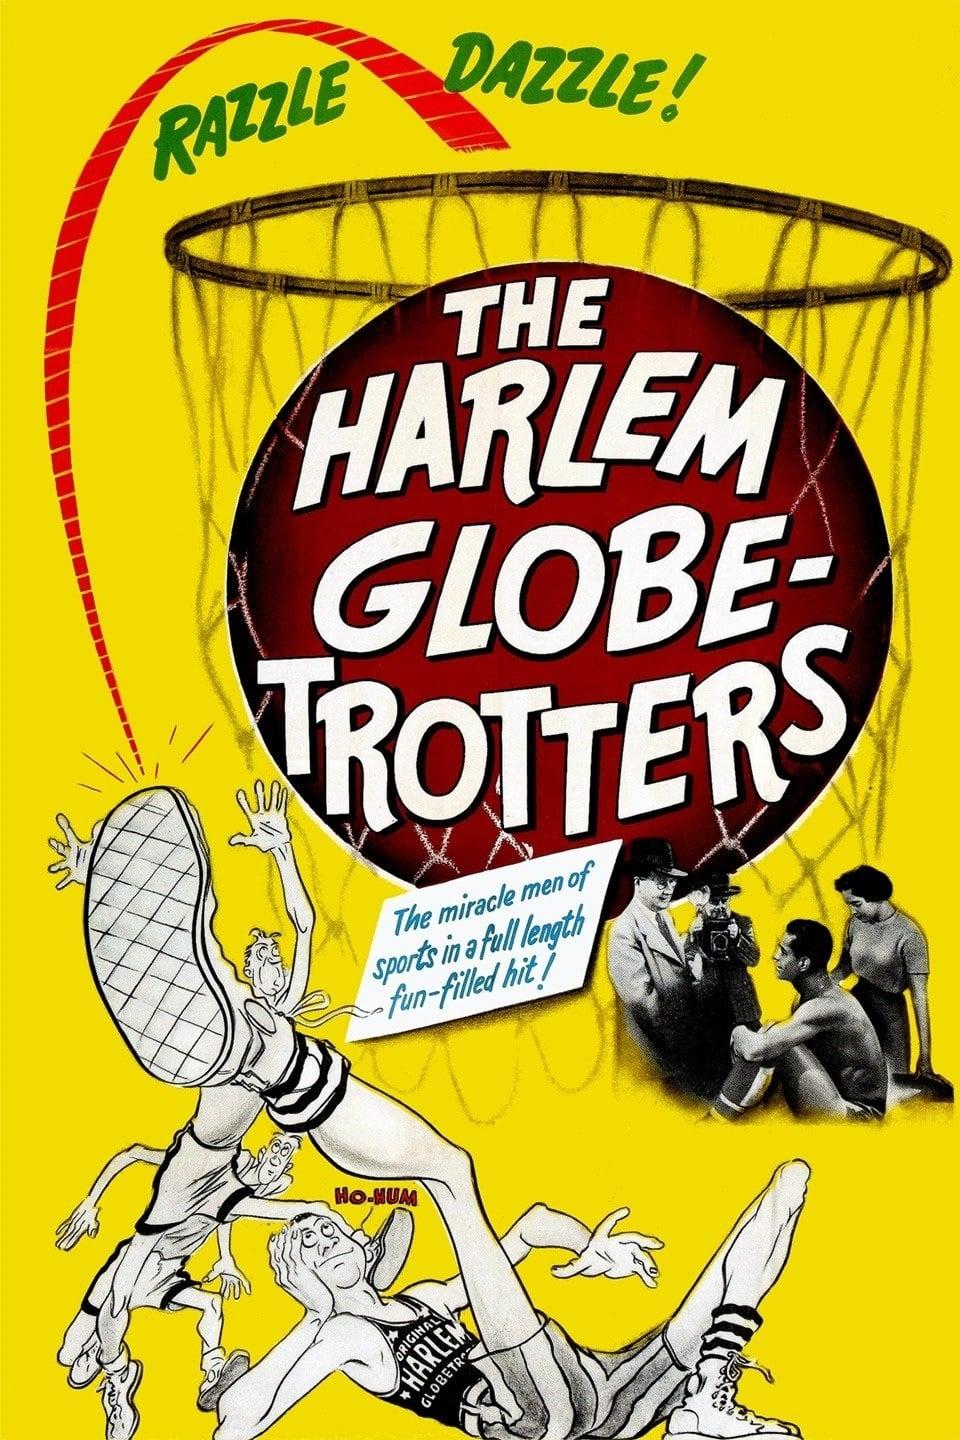 The Harlem Globetrotters poster